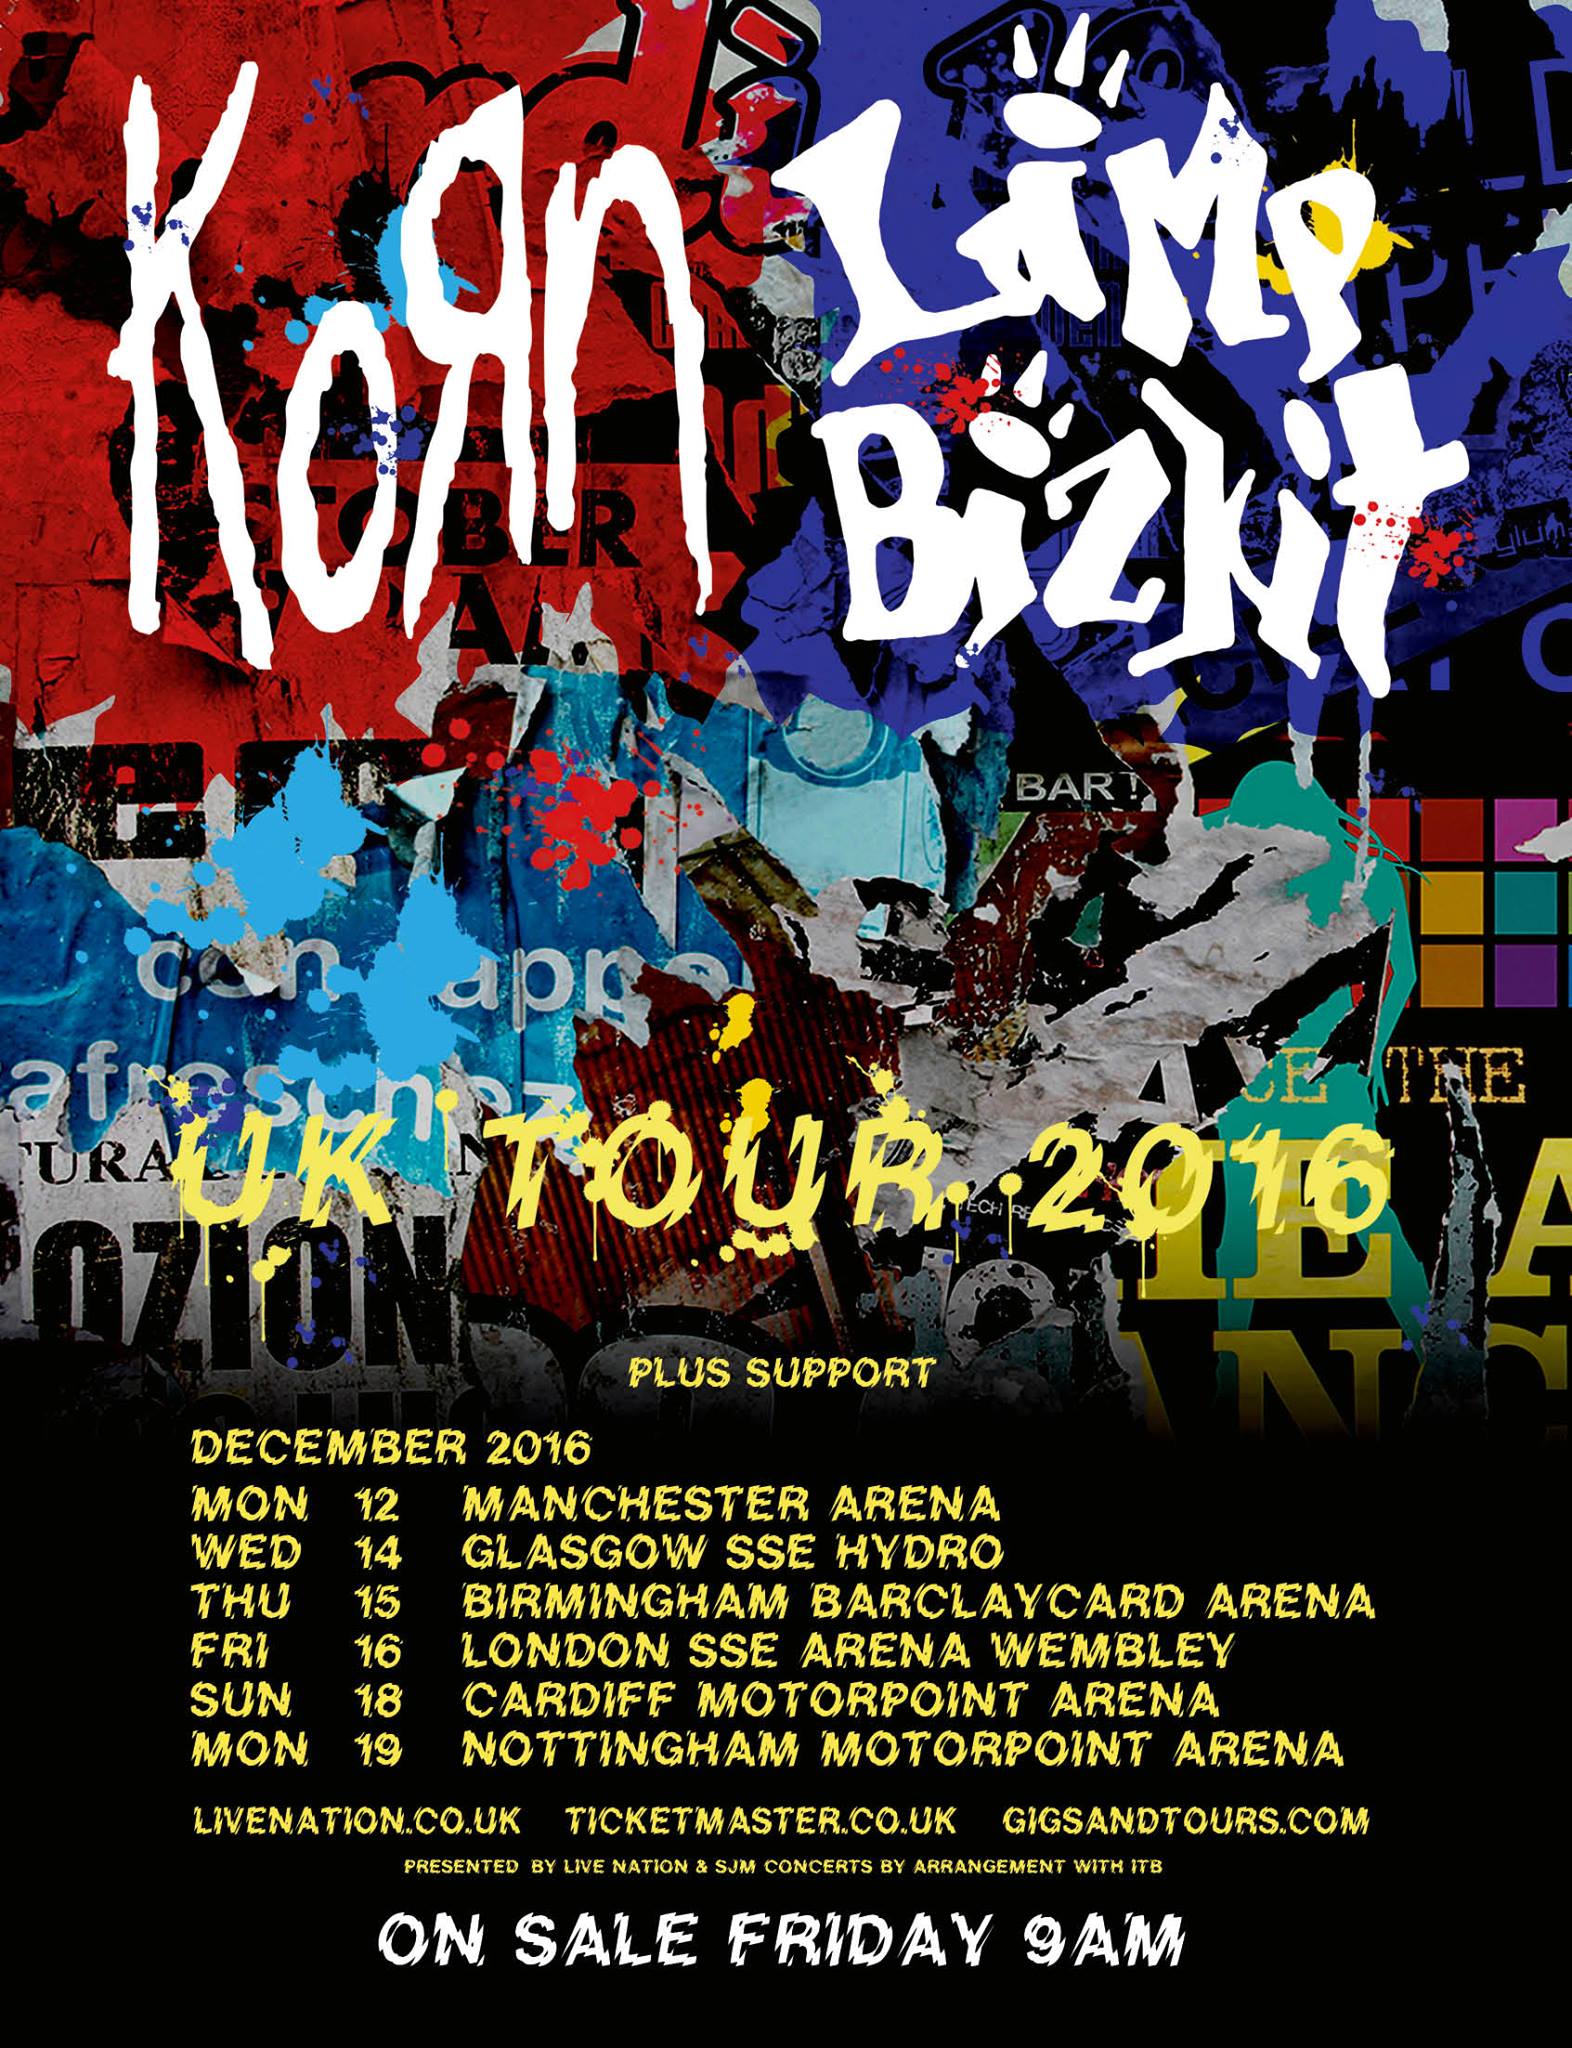 KORN and LIMP BIZKIT ANNOUNCE 2016 UK WINTER TOUR The Rock Revival